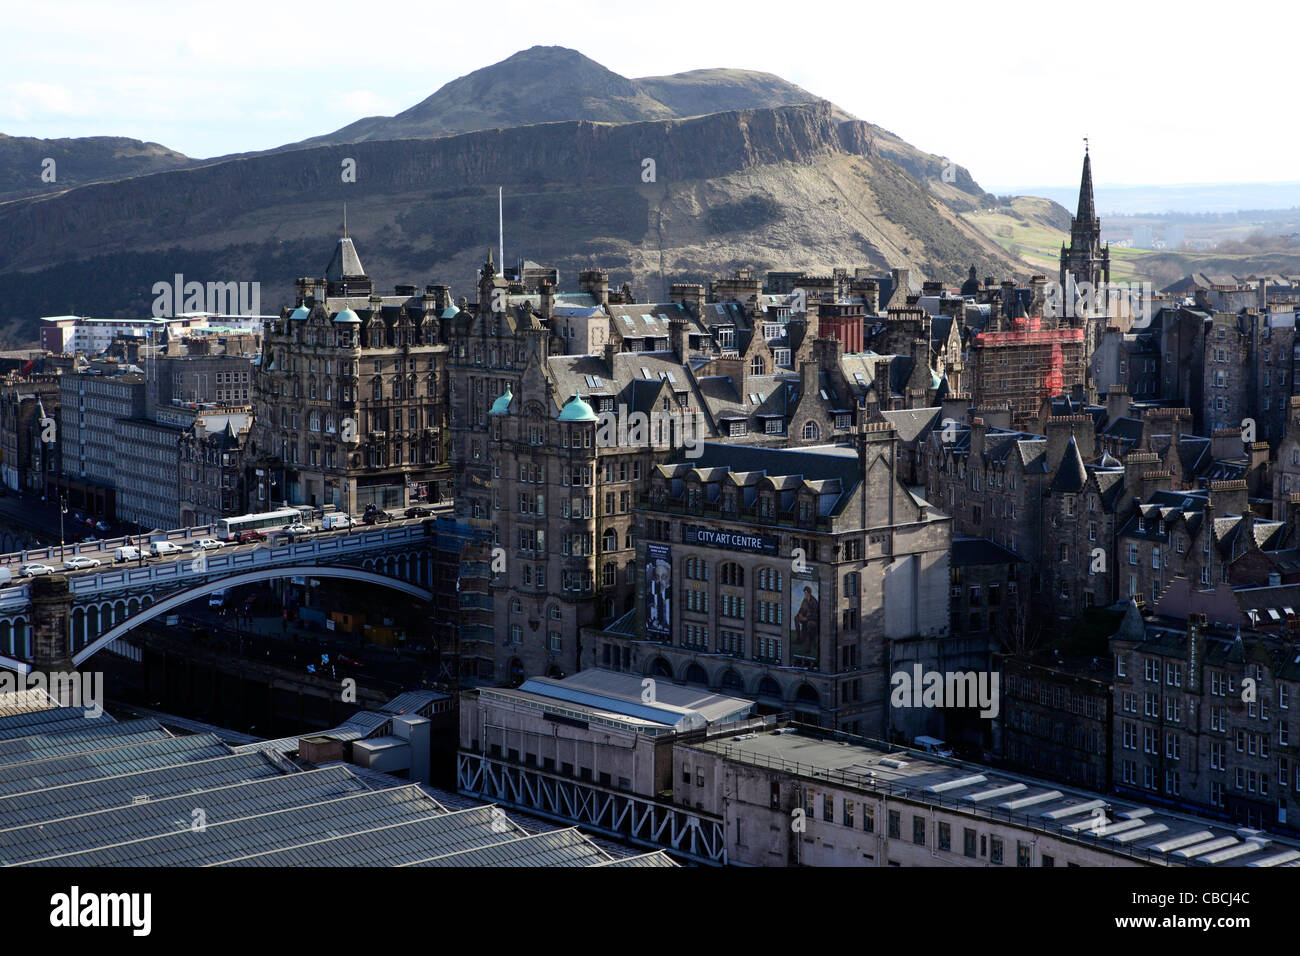 The New Town in Edinburgh, Scotland. Stock Photo